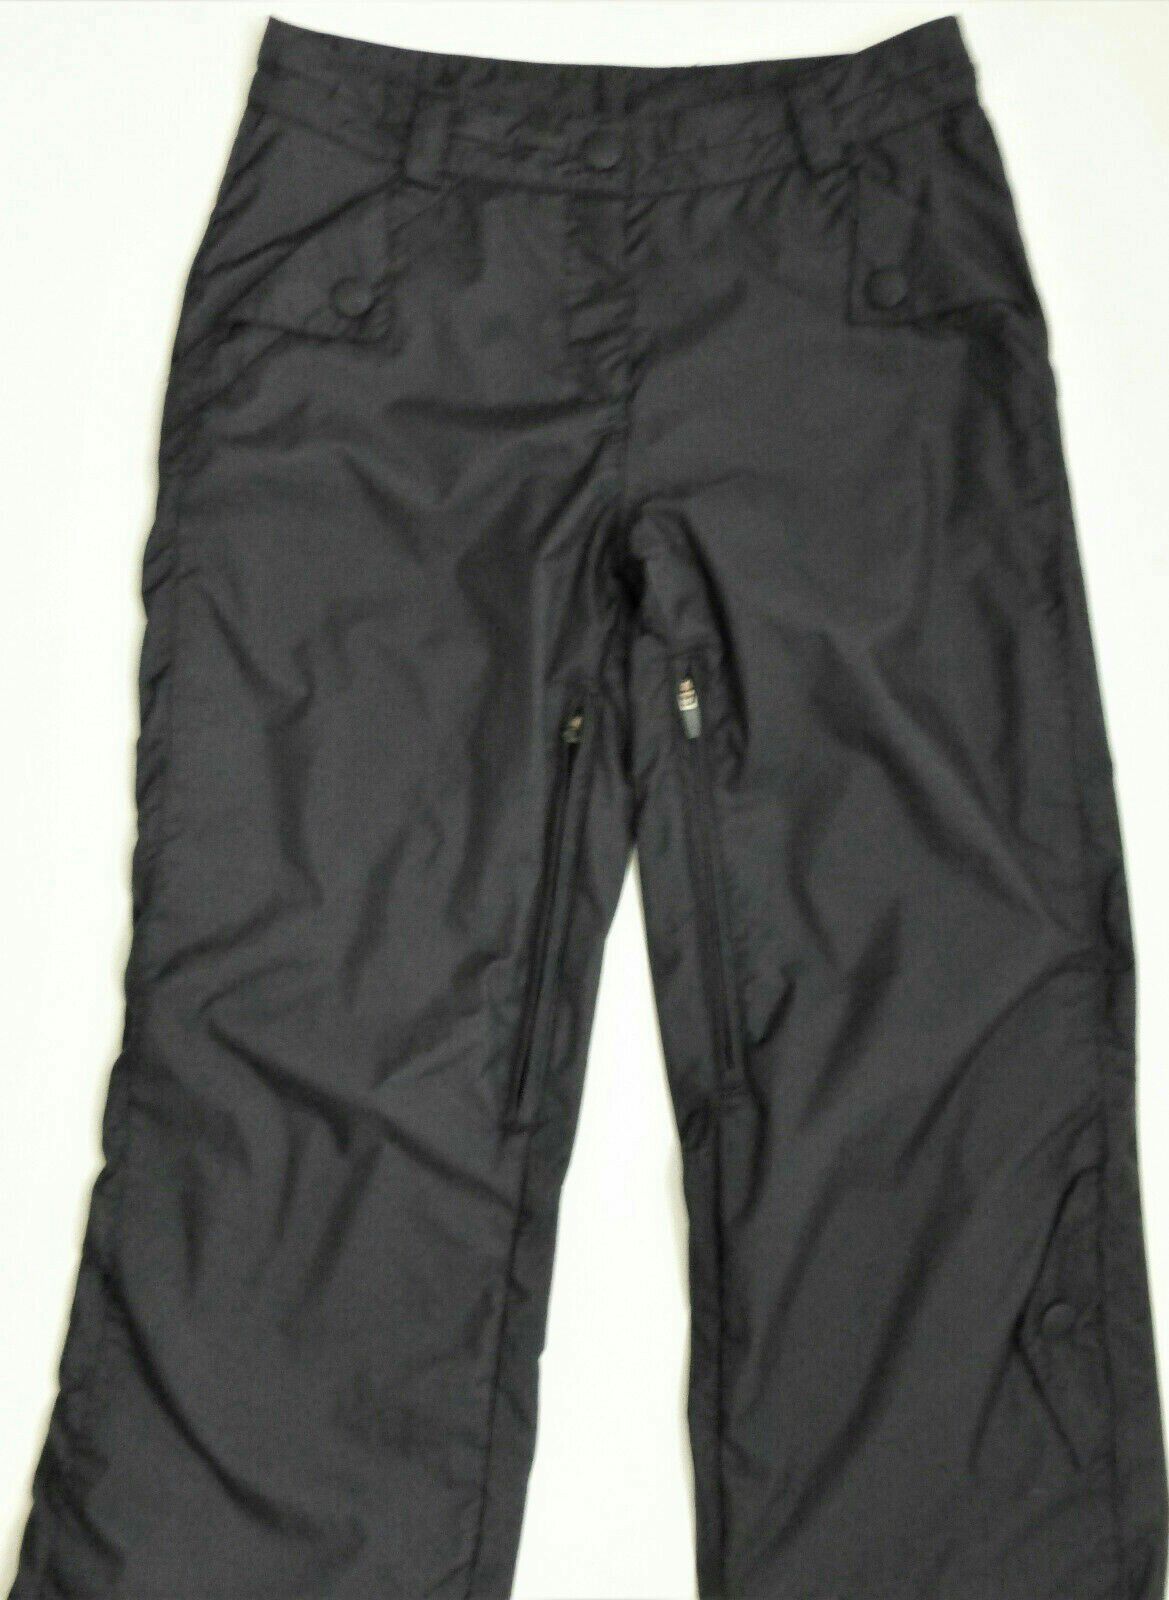 WOMENS 8 (Medium) OBERMEYER Method Black Insulated Ski Snowboard Pants Vent Zippers